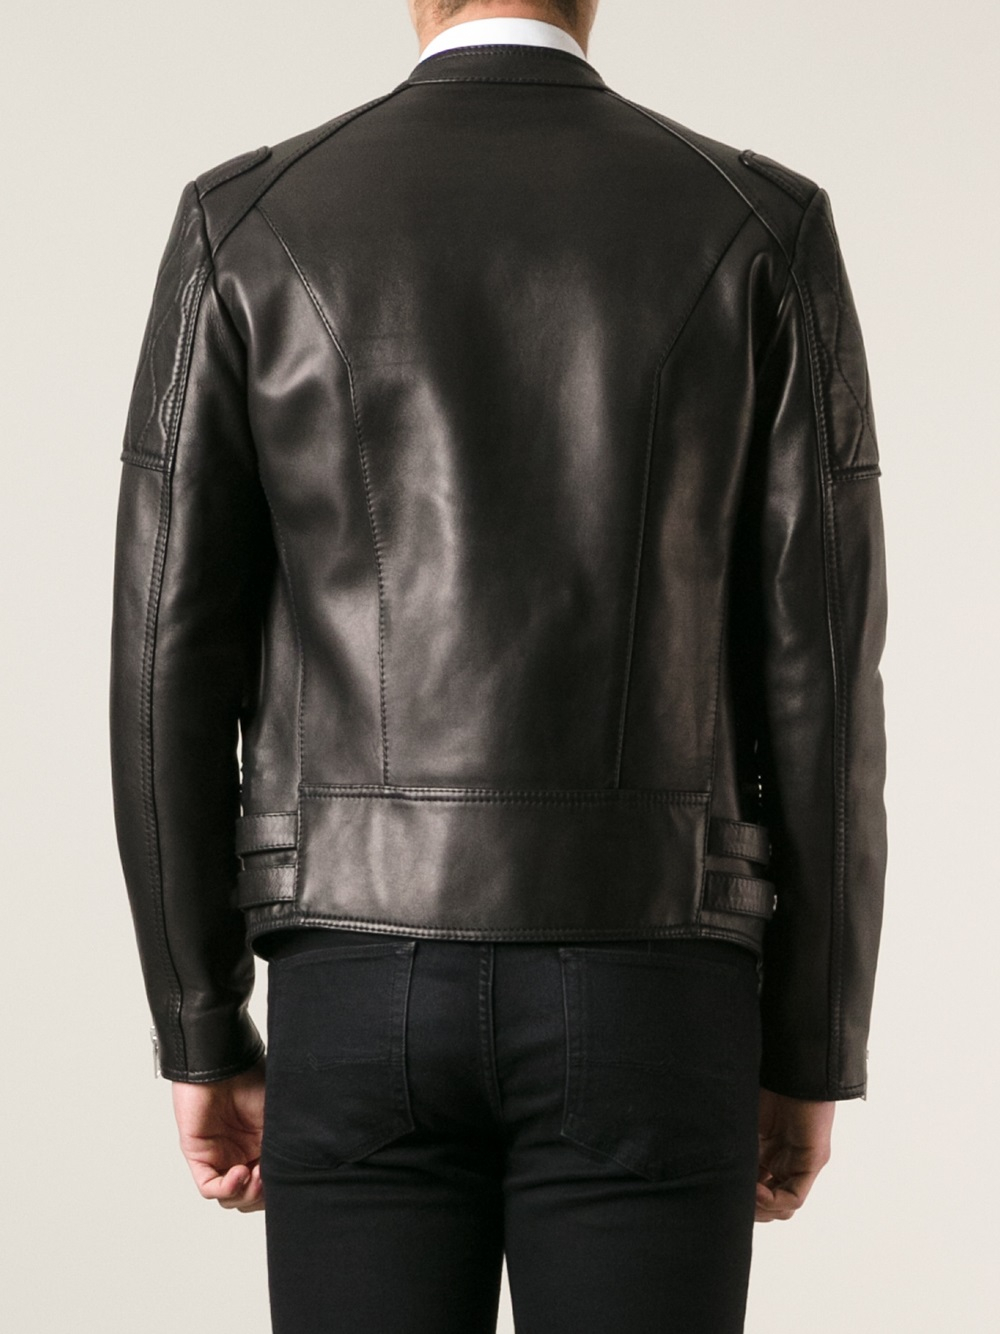 Lyst - Balenciaga Fitted Biker Jacket in Black for Men